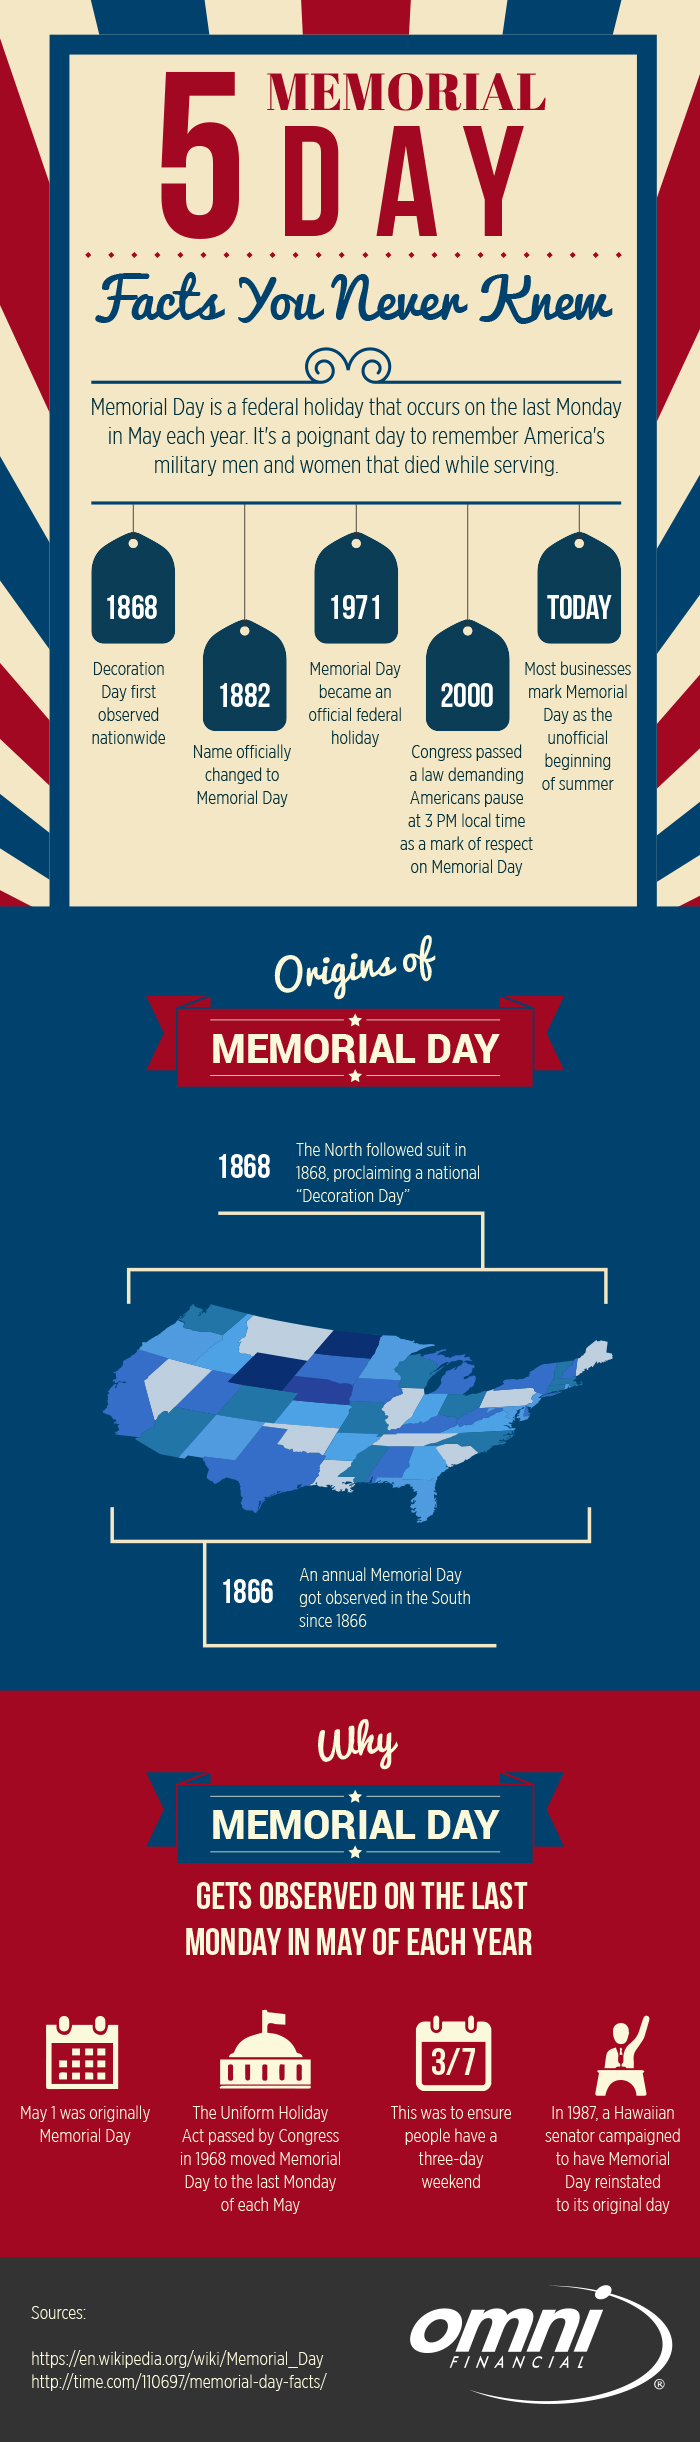 MemorialDay-infographic